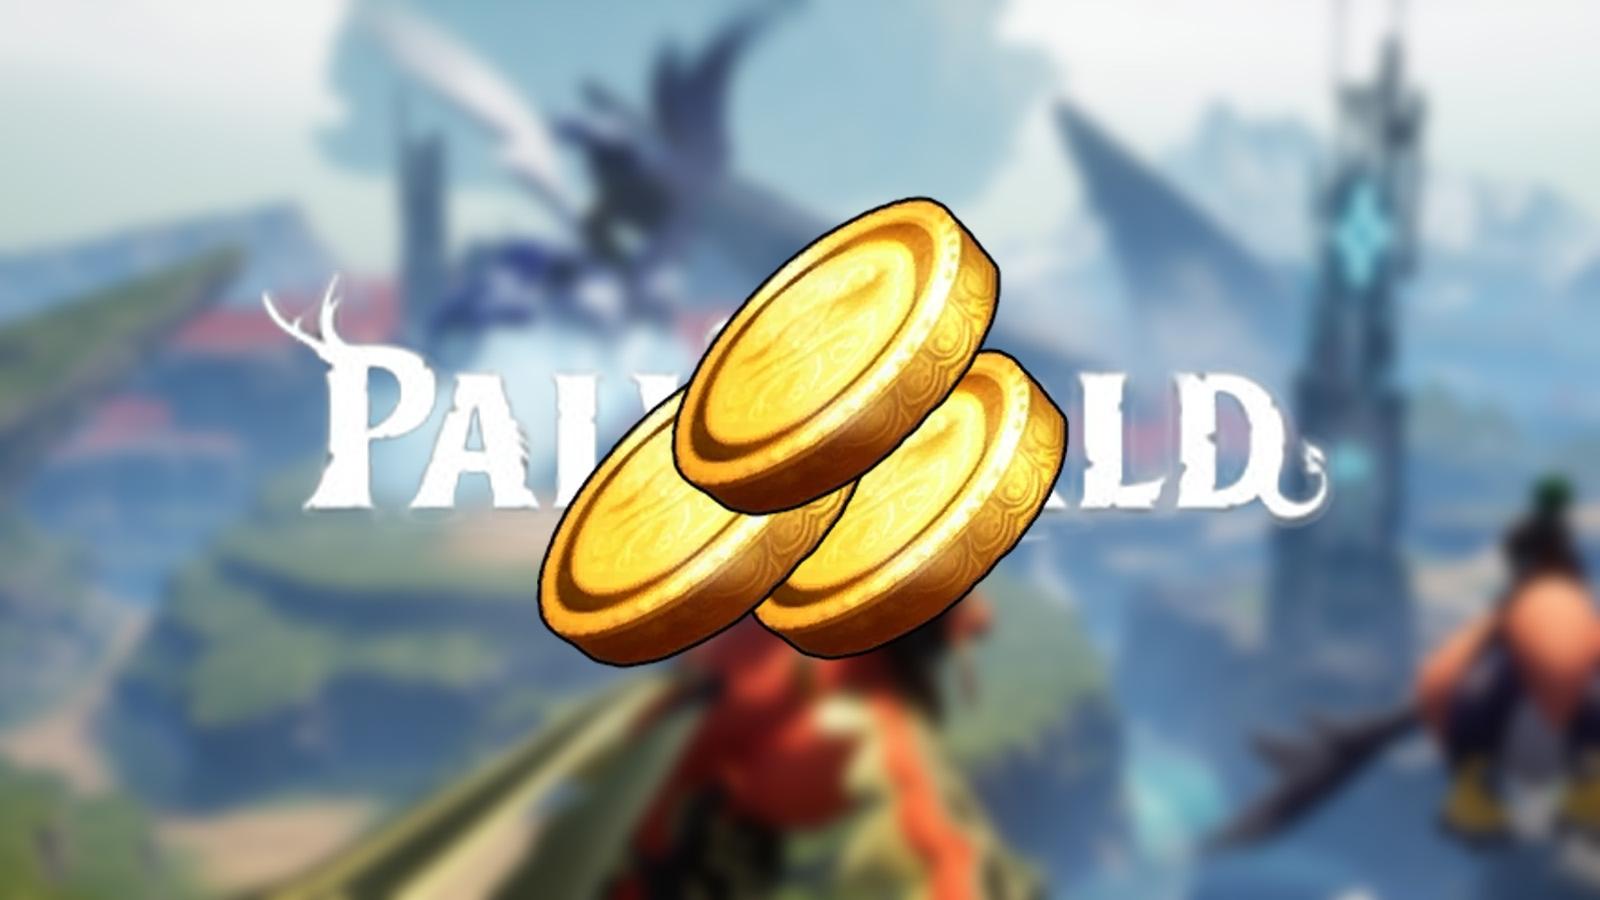 Palworld Gold Coins Logo